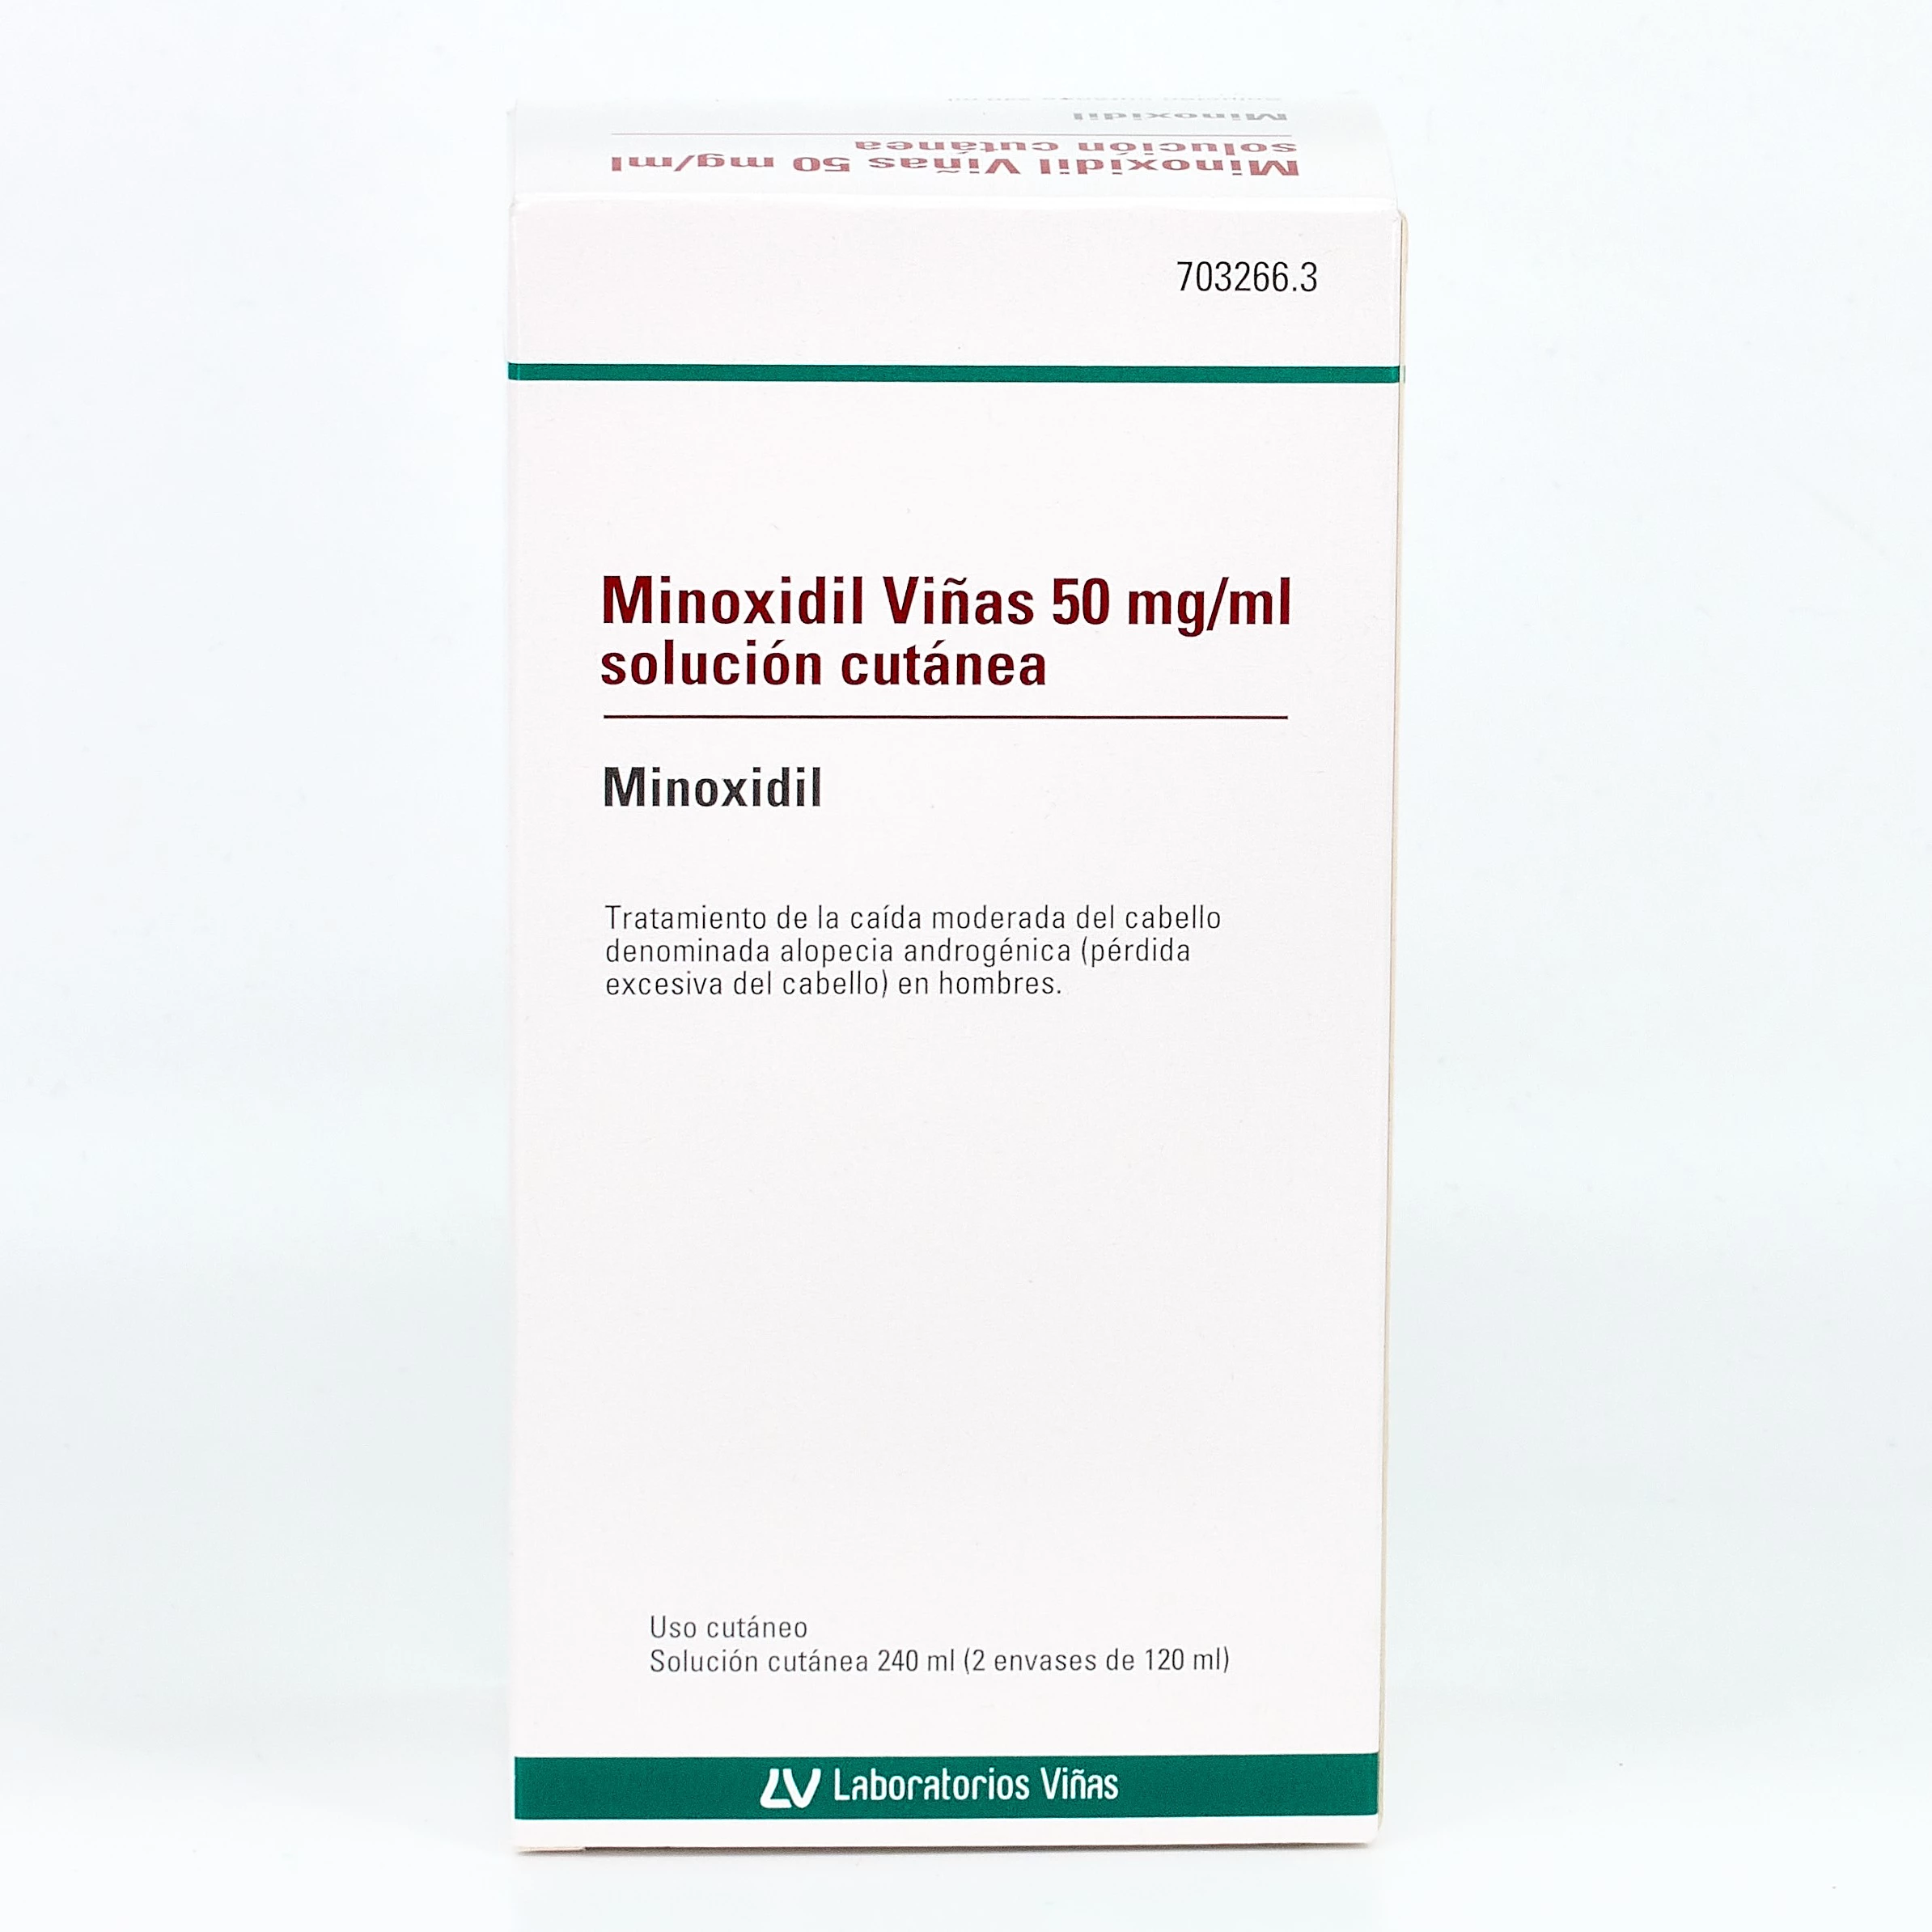 Violeta ex Caramelo Comprar Minoxidil viñas 50mg/ml, 240 ml sin receta